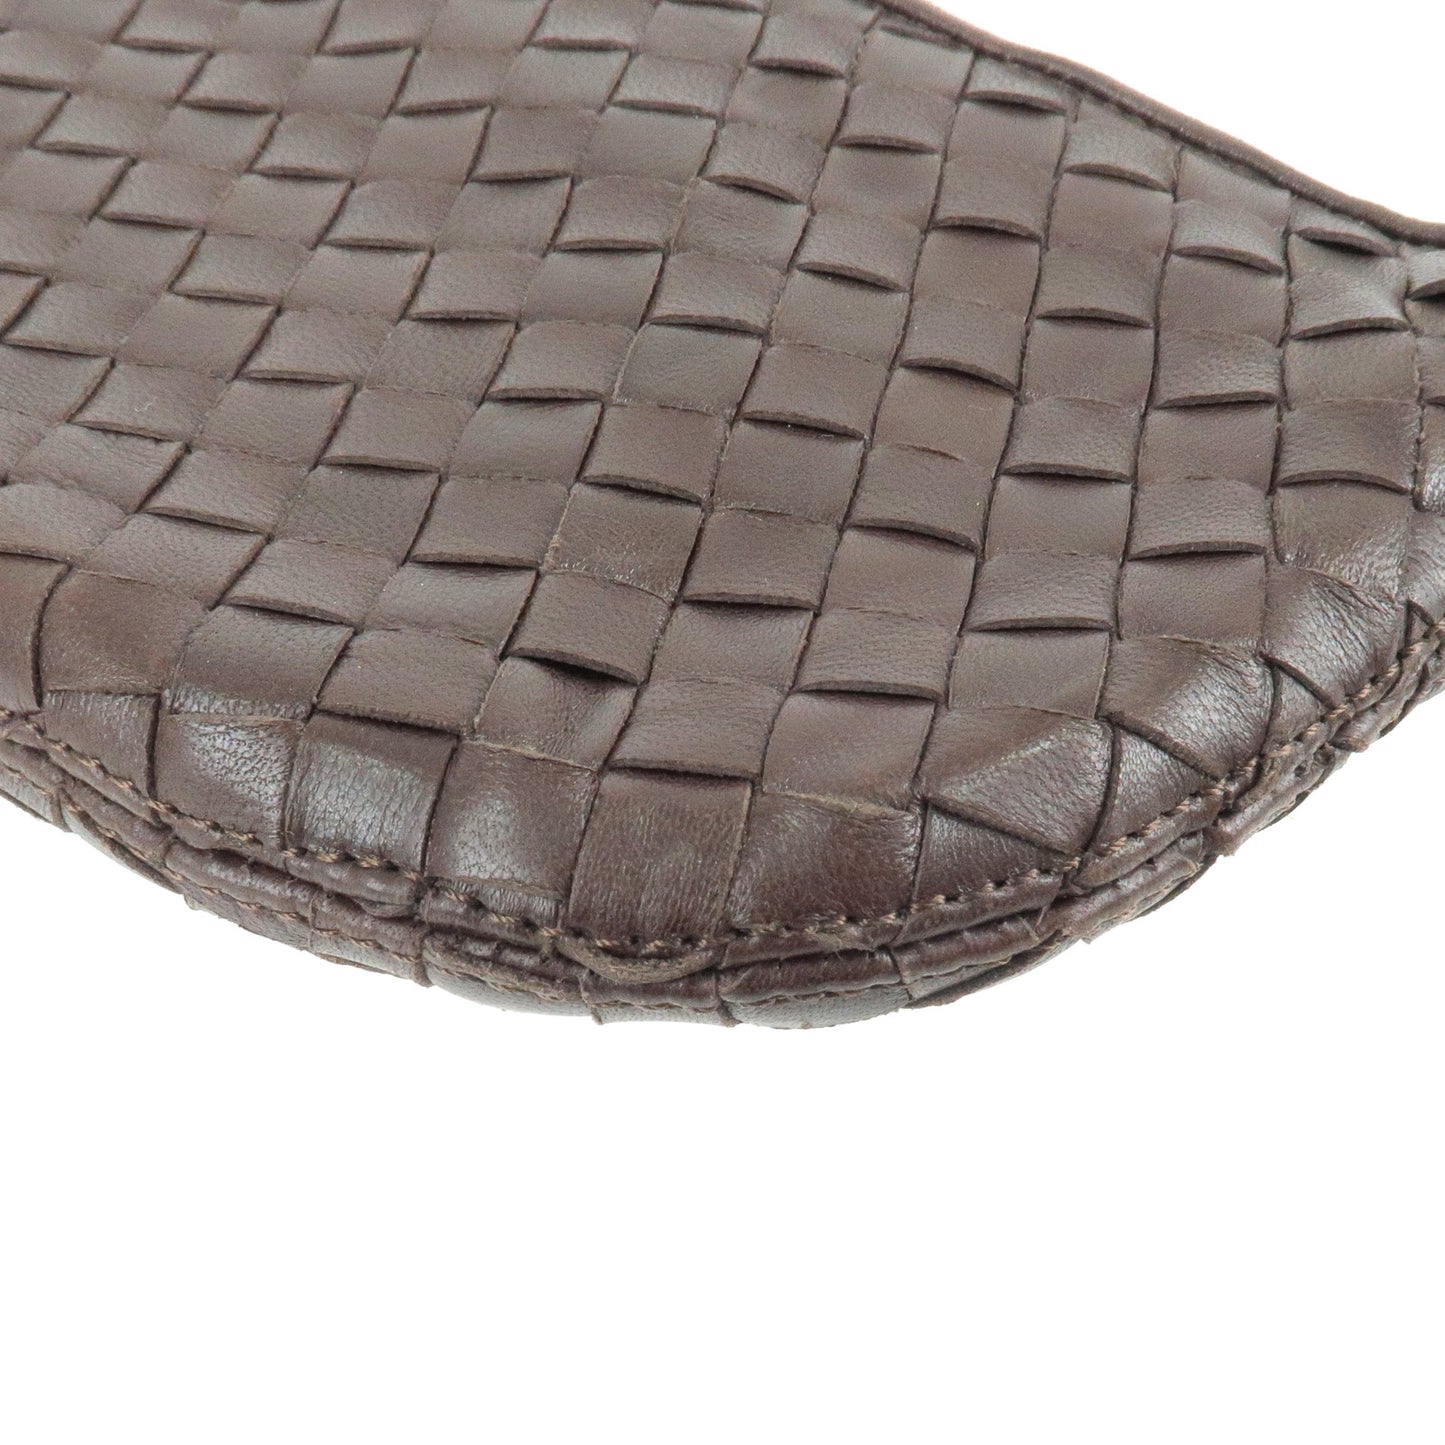 BOTTEGA VENETA Intrecciato Leather Shoulder Pouch Bag Brown